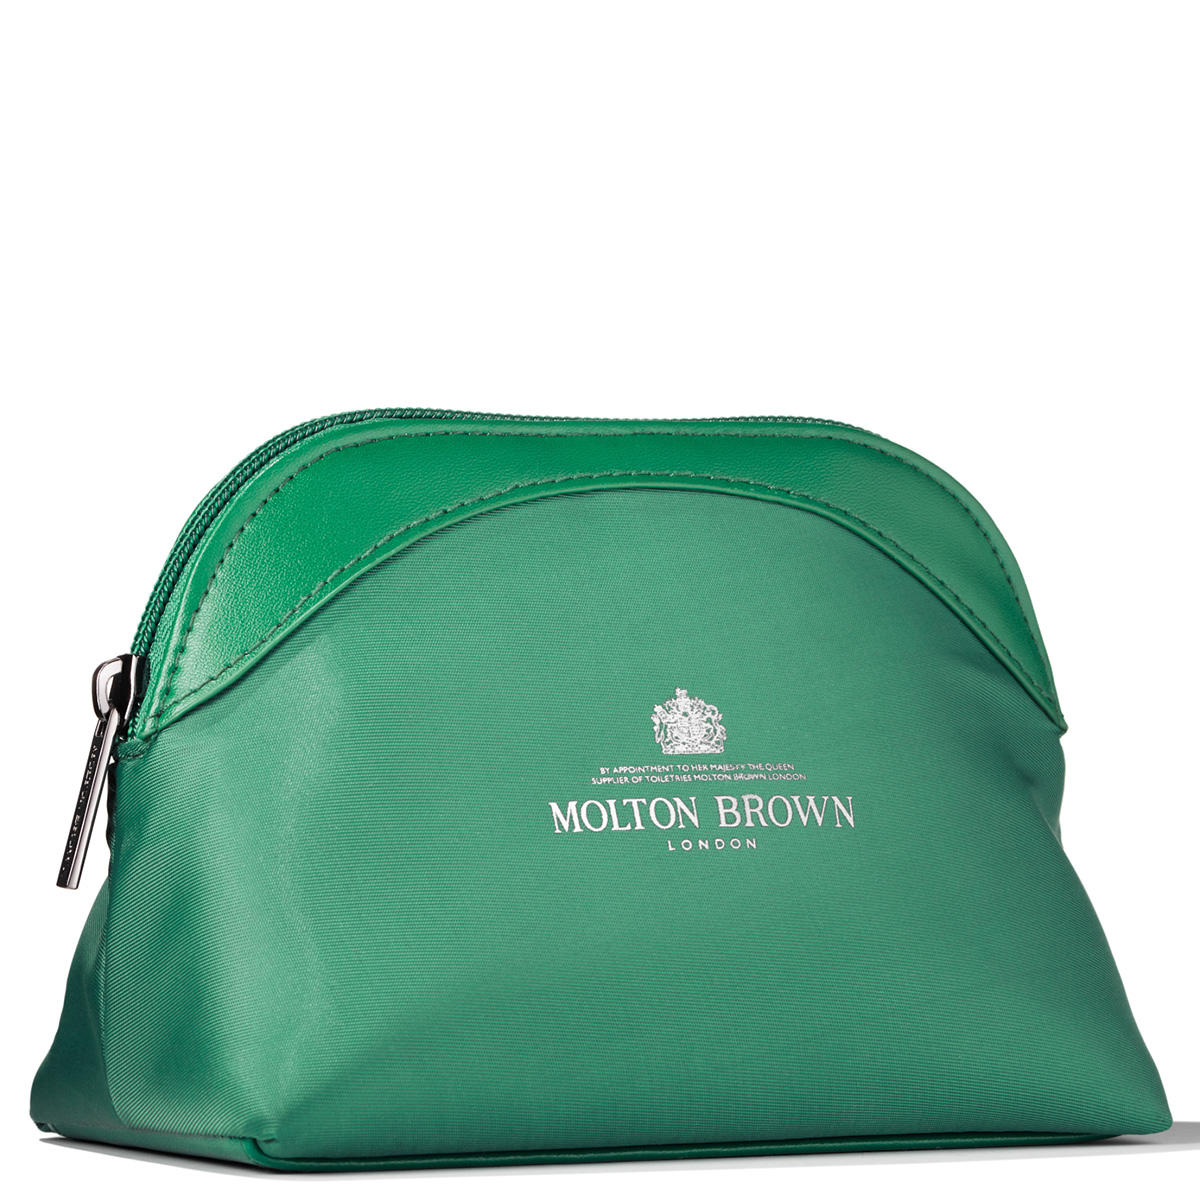 MOLTON BROWN The Elegant Escapist Body & Hair Mini Travel Bag  - 3